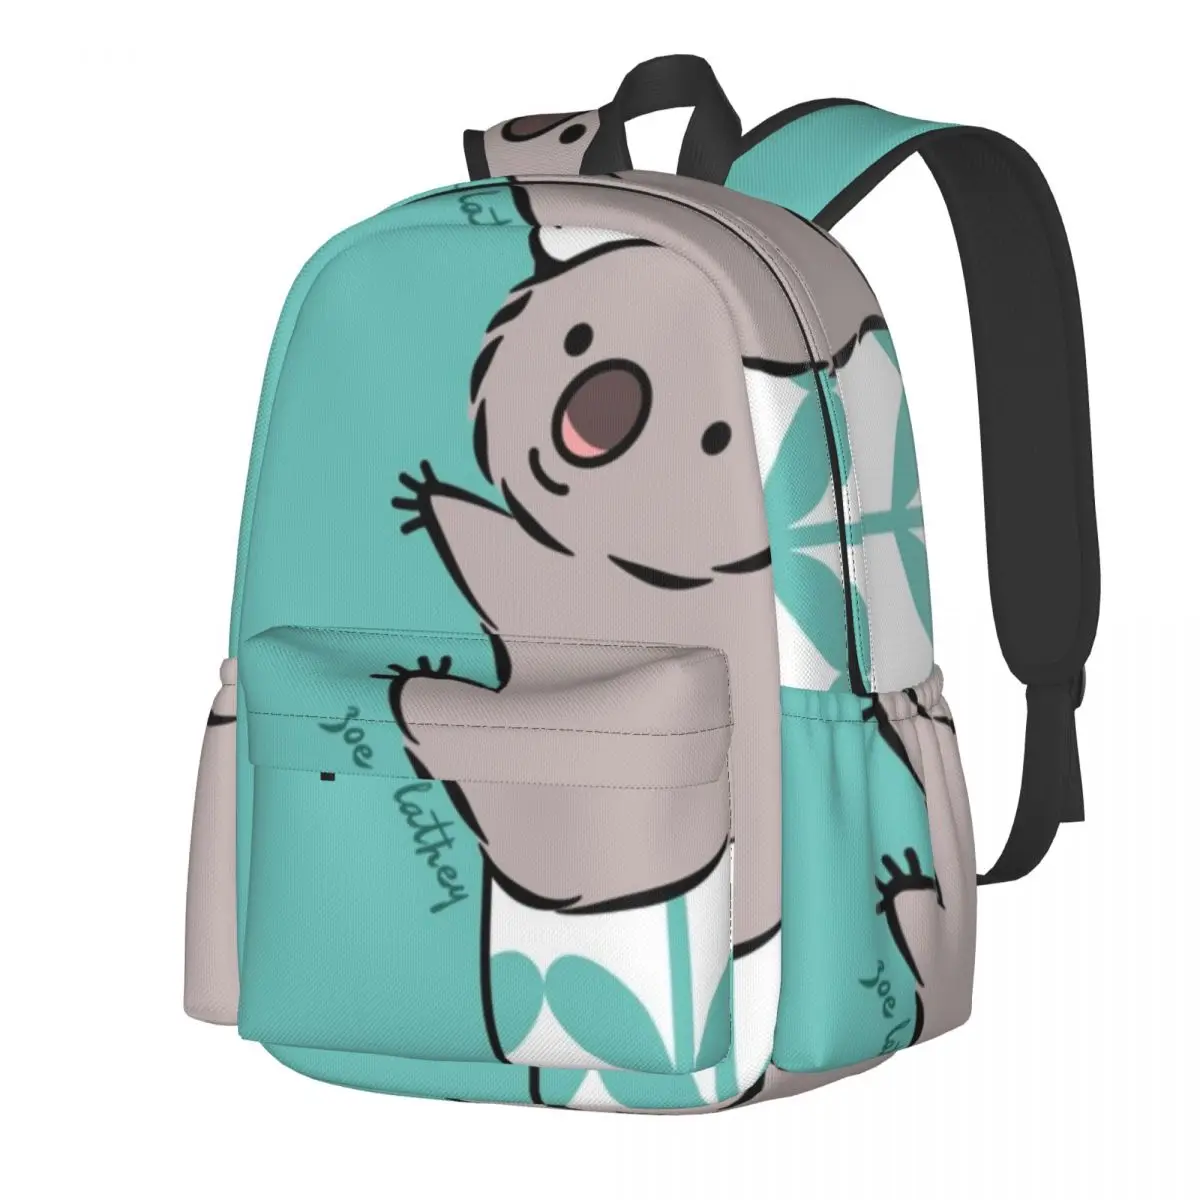 Clinging Koala Backpack animal Cycling Backpacks Youth Colorful Durable School Bags Kawaii Rucksack